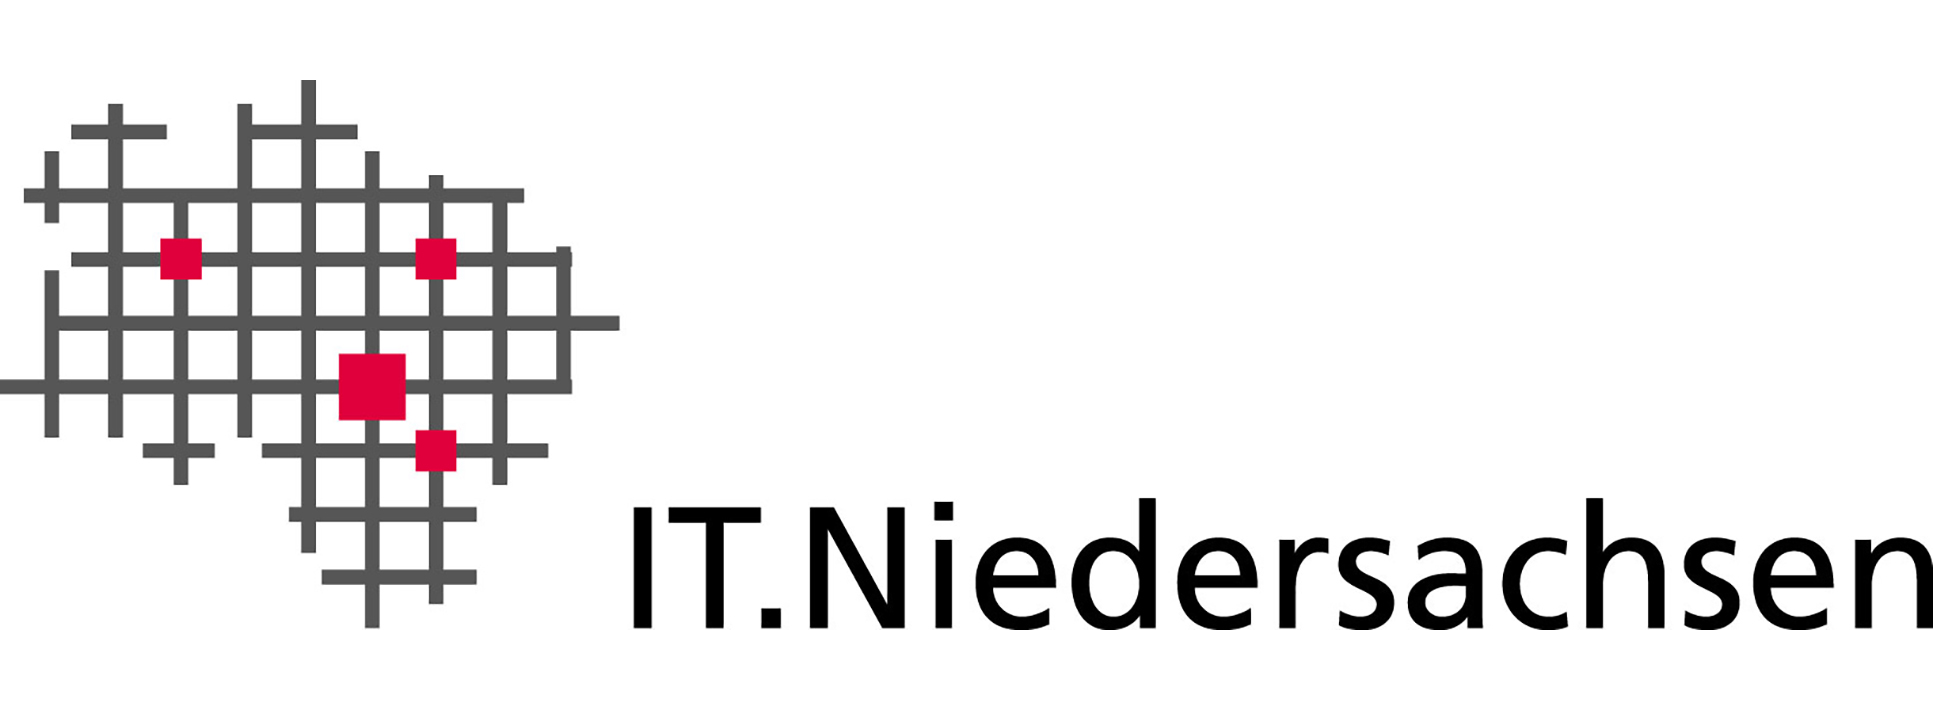 Logo IT Niedersachsen